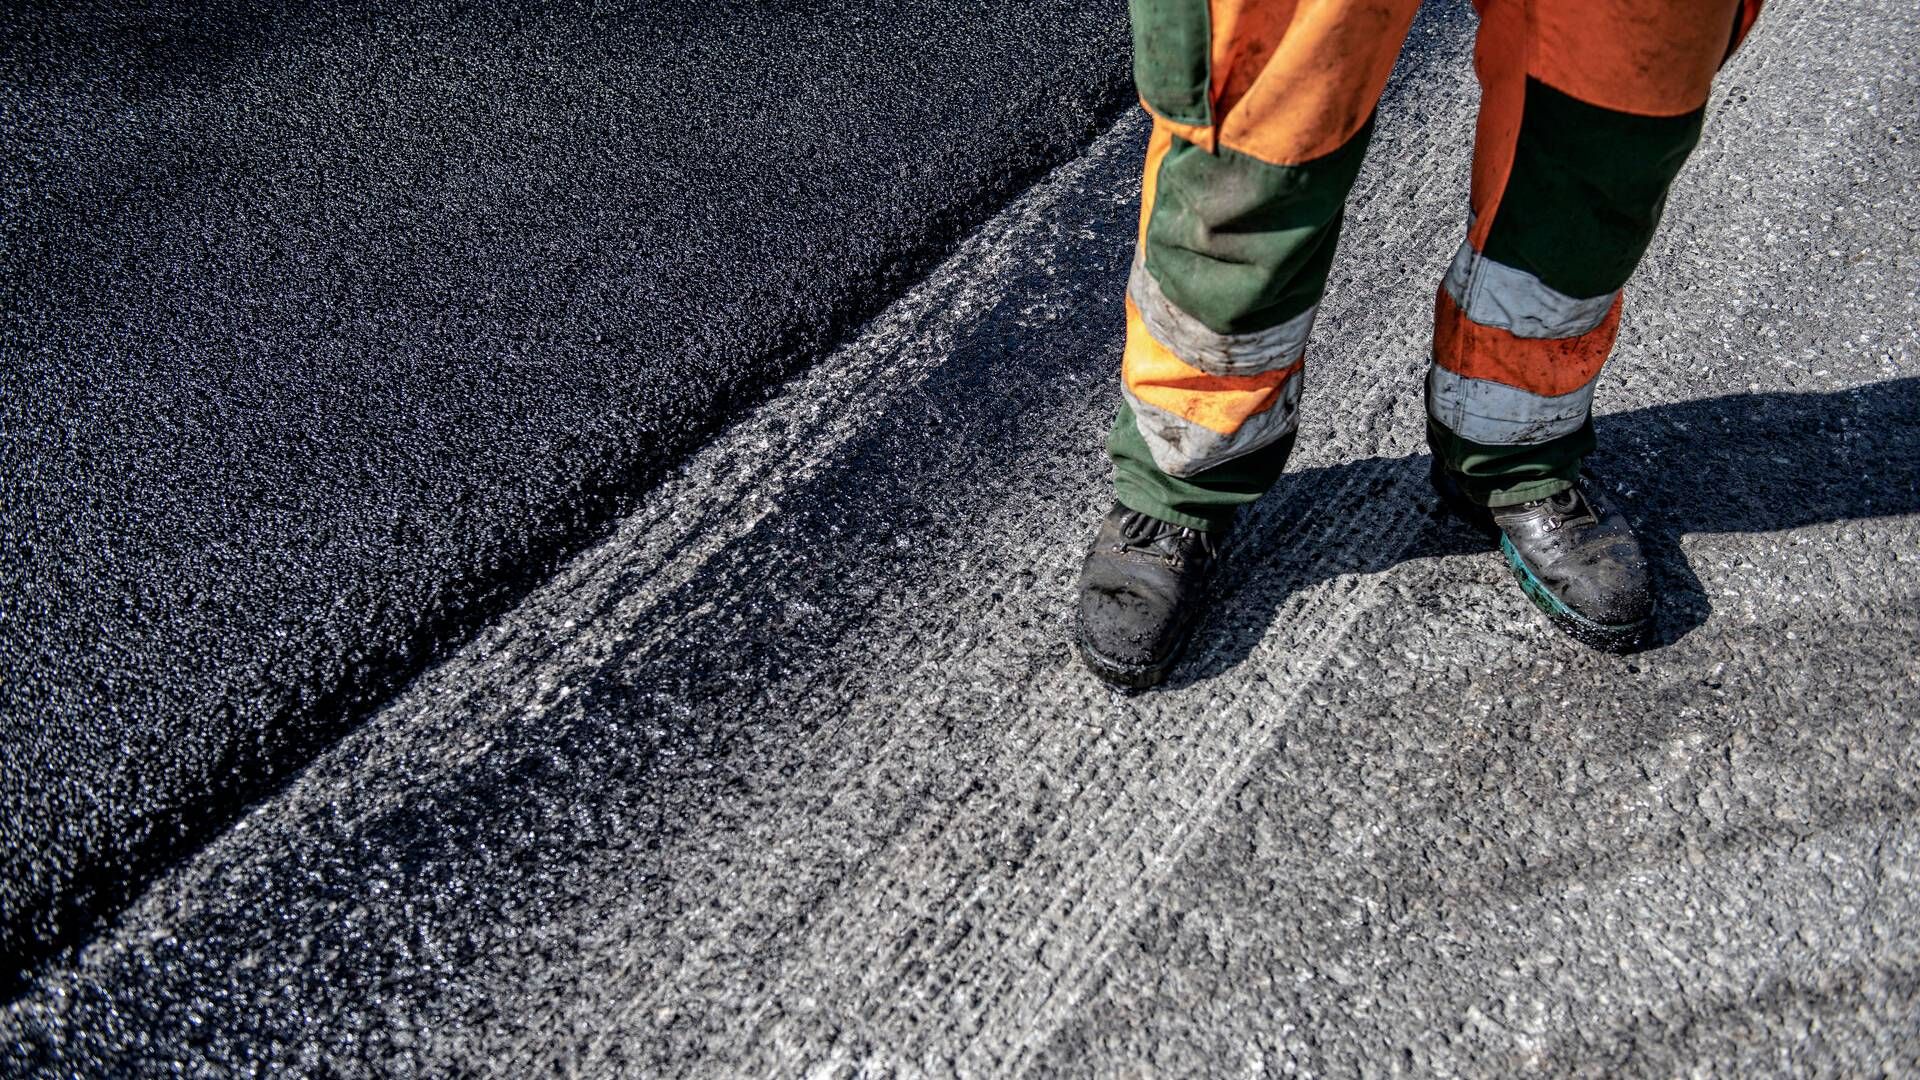 Arkil lægger blandt andet asfalt. | Foto: Casper Dalhoff/Ritzau Scanpix